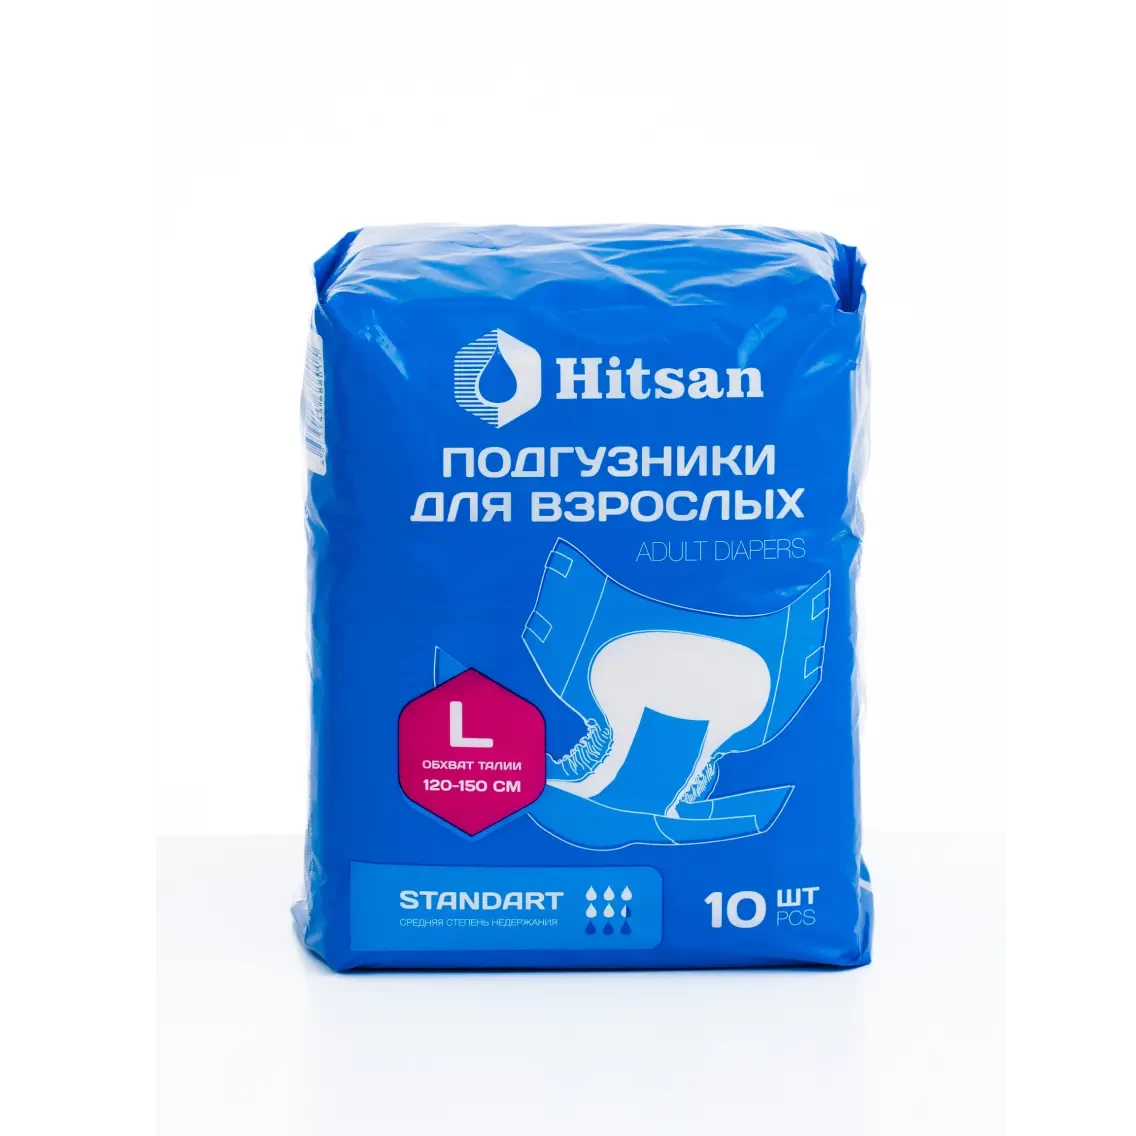 Подгузники для взрослых Hitsan Размер L (120-150см) 10шт